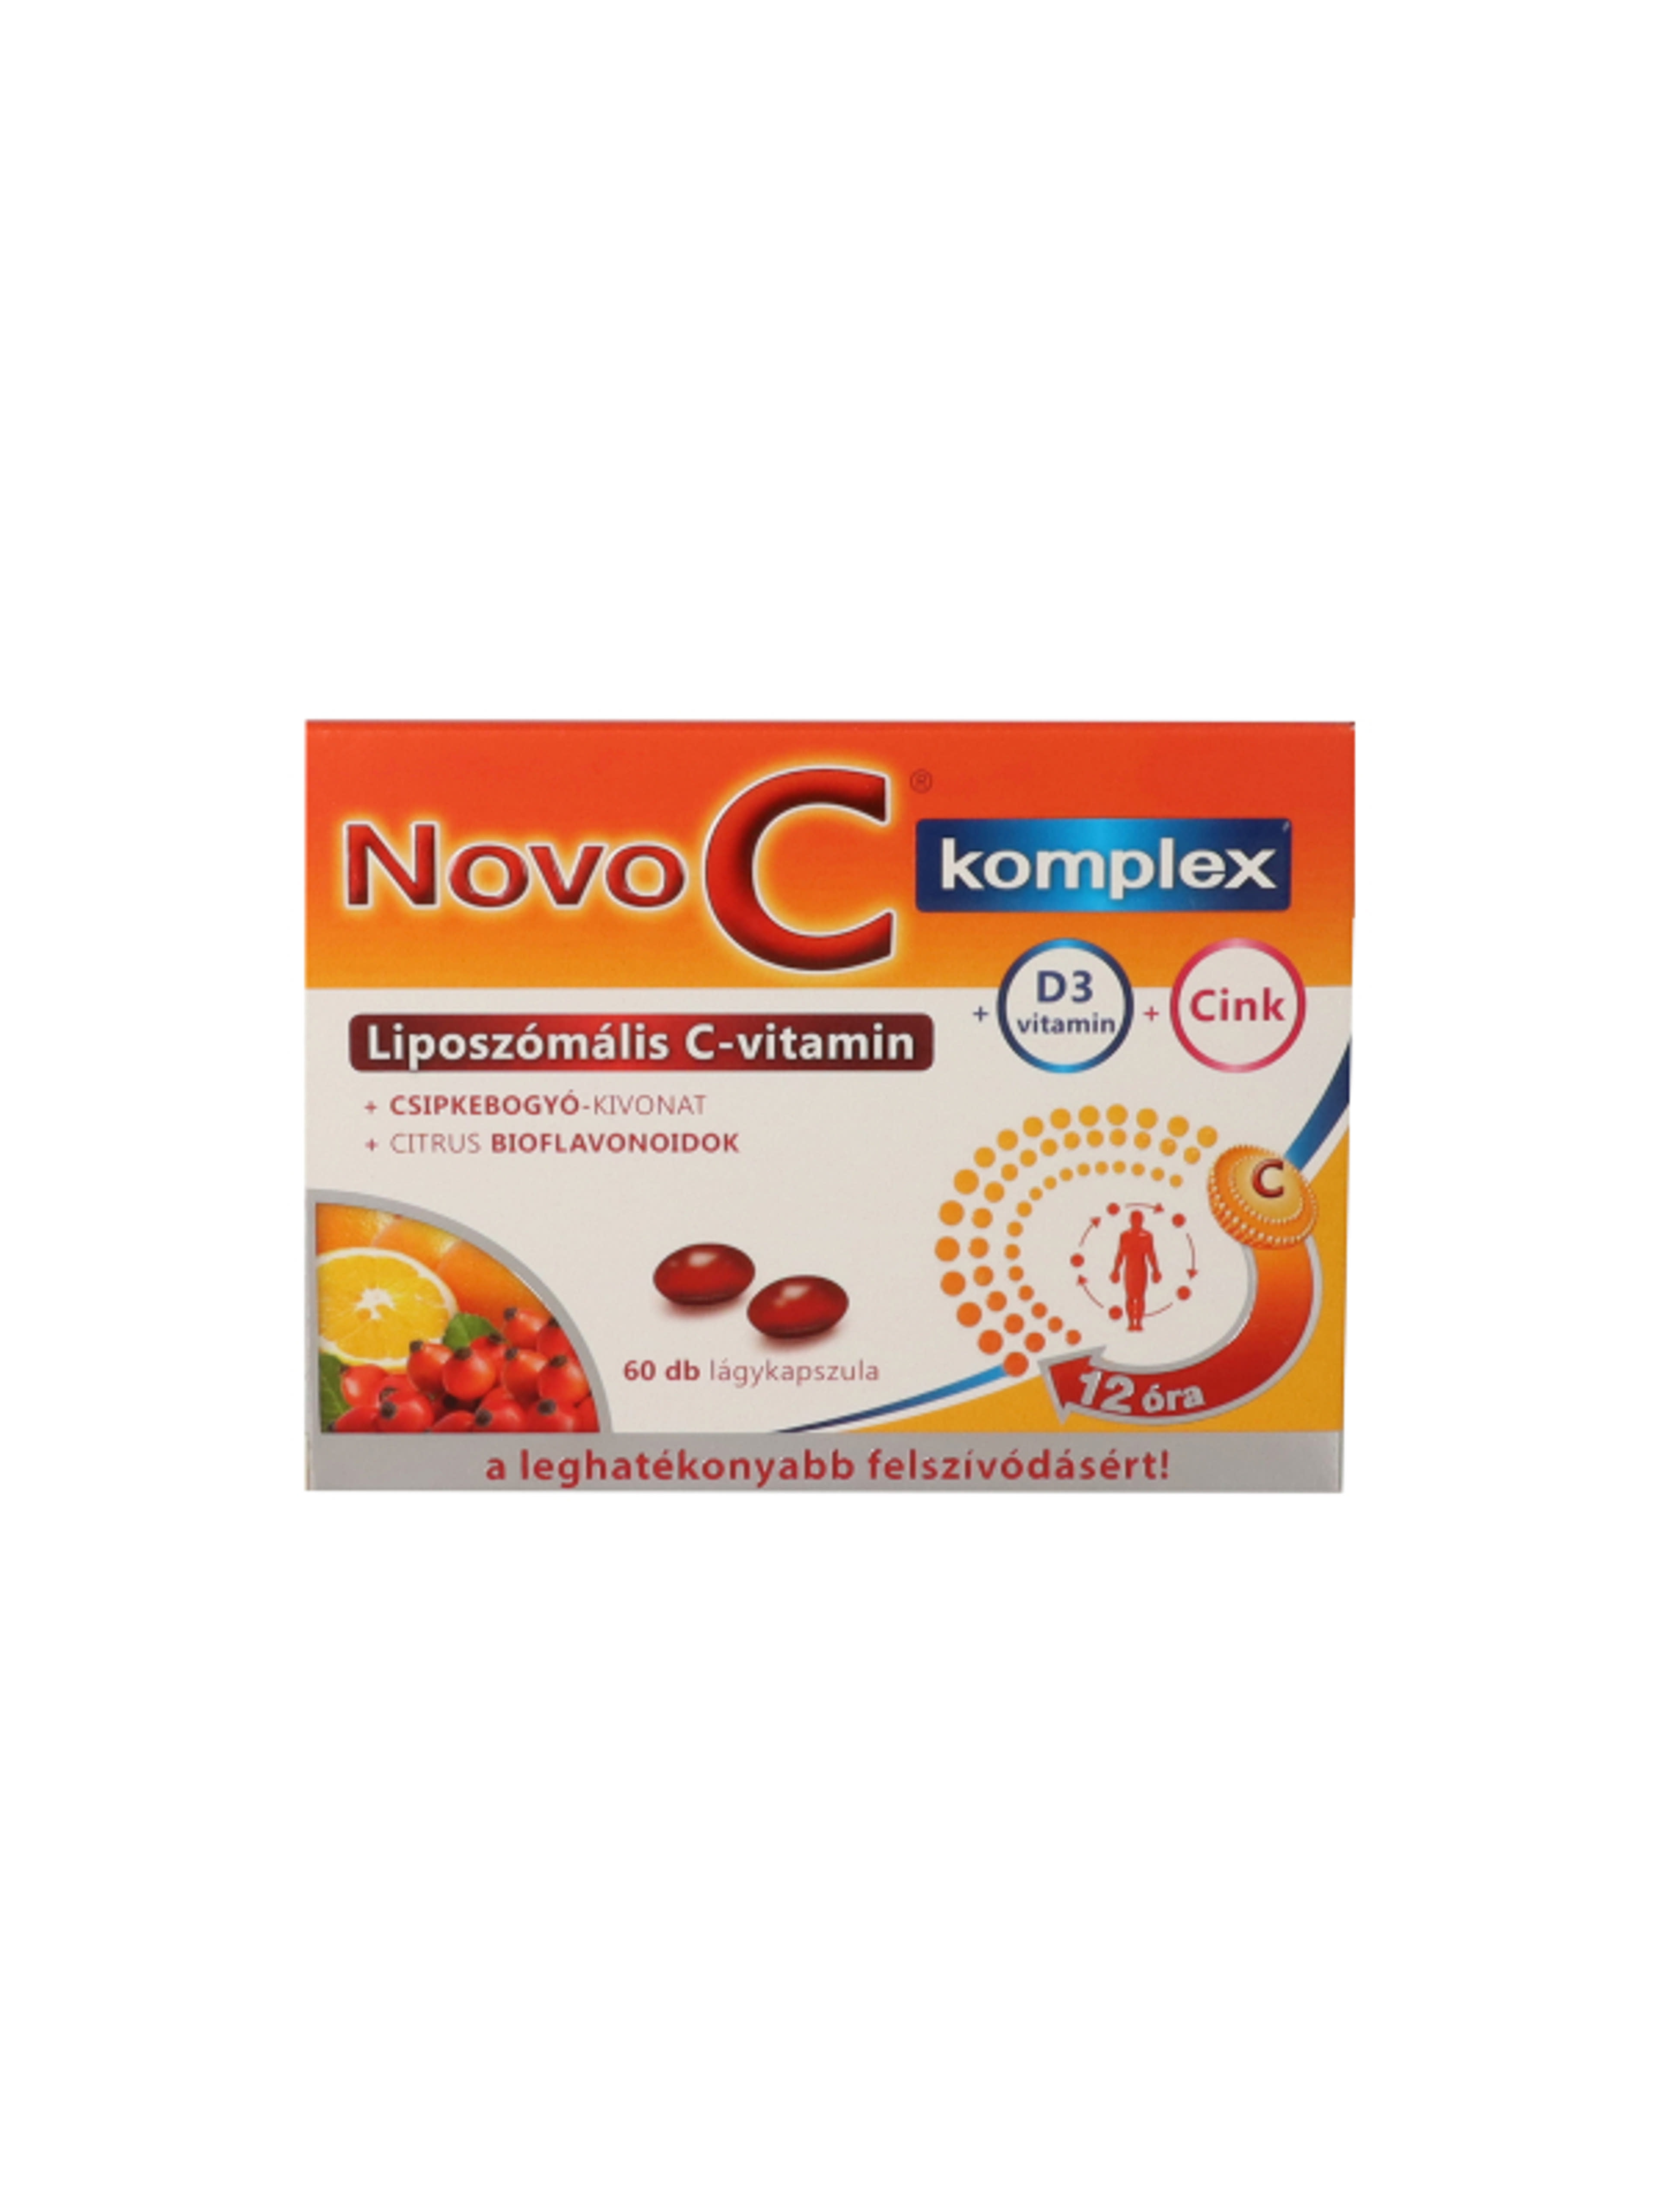 Novo C komplex liposzómás retard  C-vitamin - 60 db-1